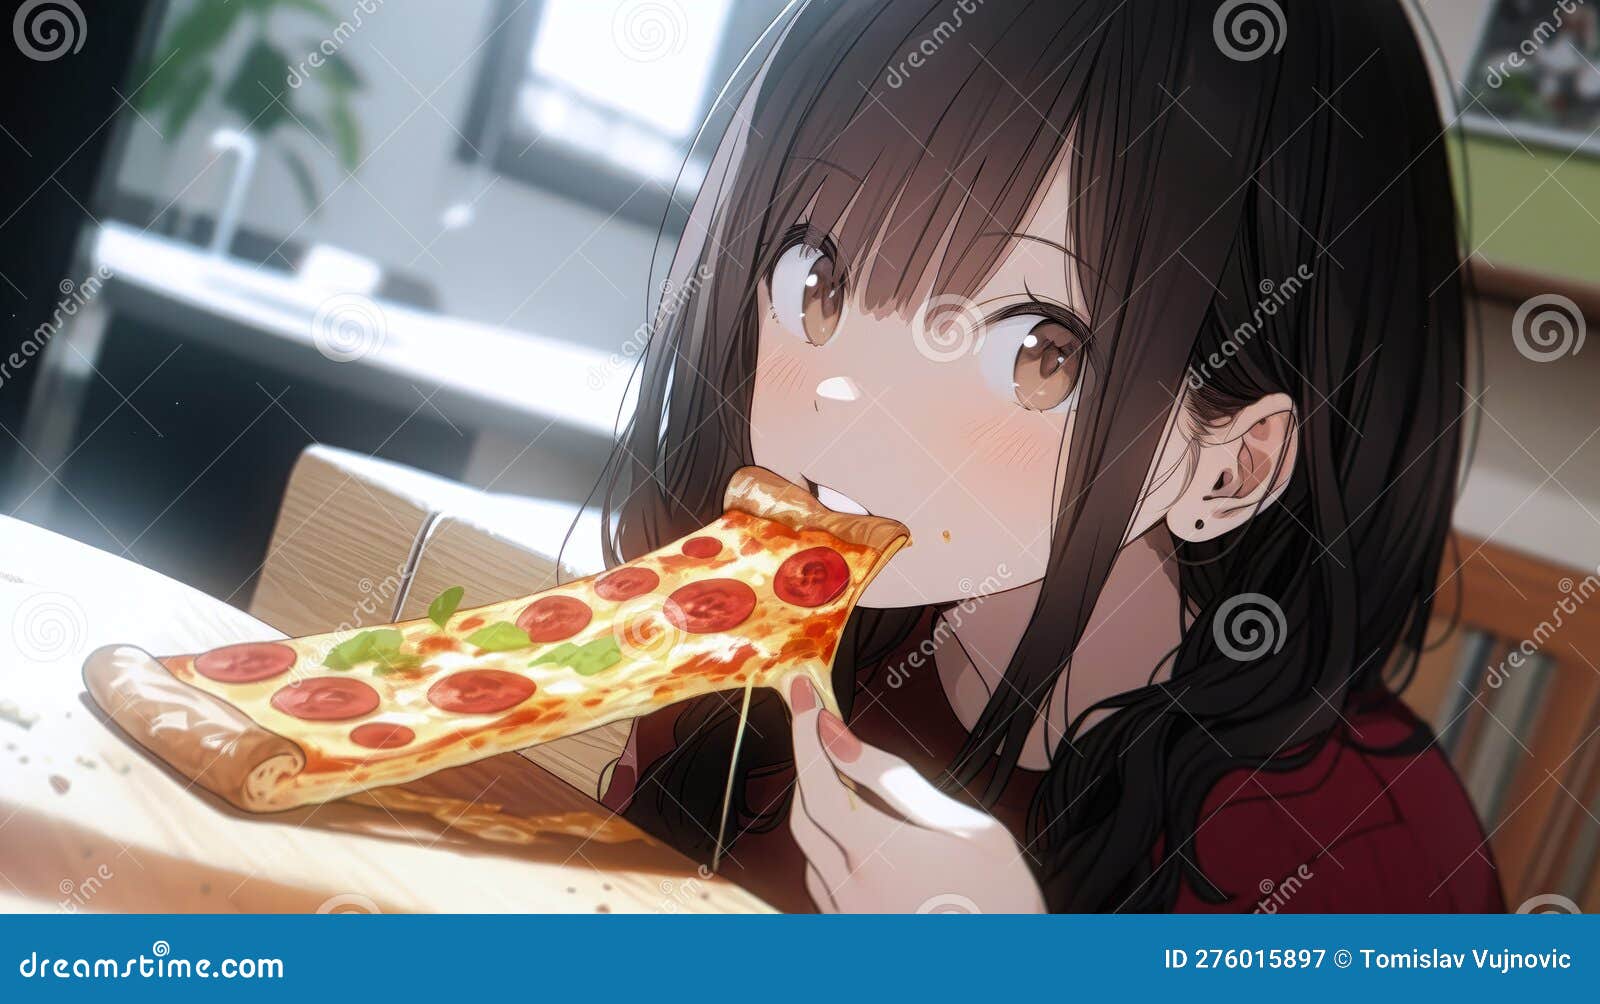 Anime Pizza by SSerenitytheOtaku on DeviantArt